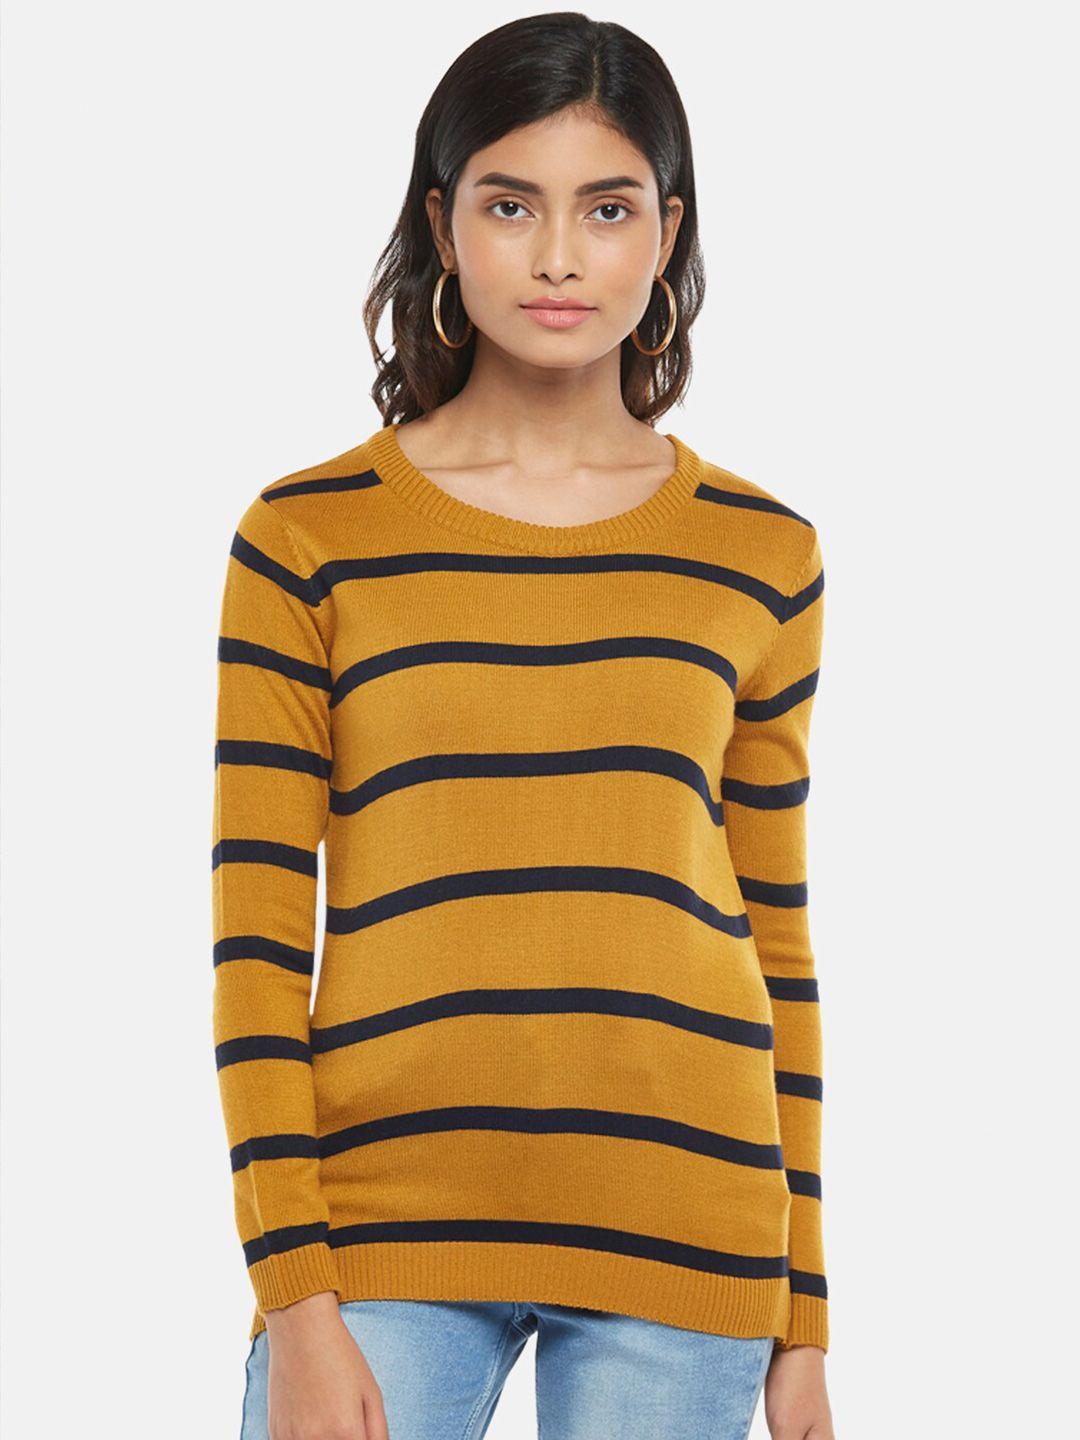 honey by pantaloons women mustard & black striped pullover